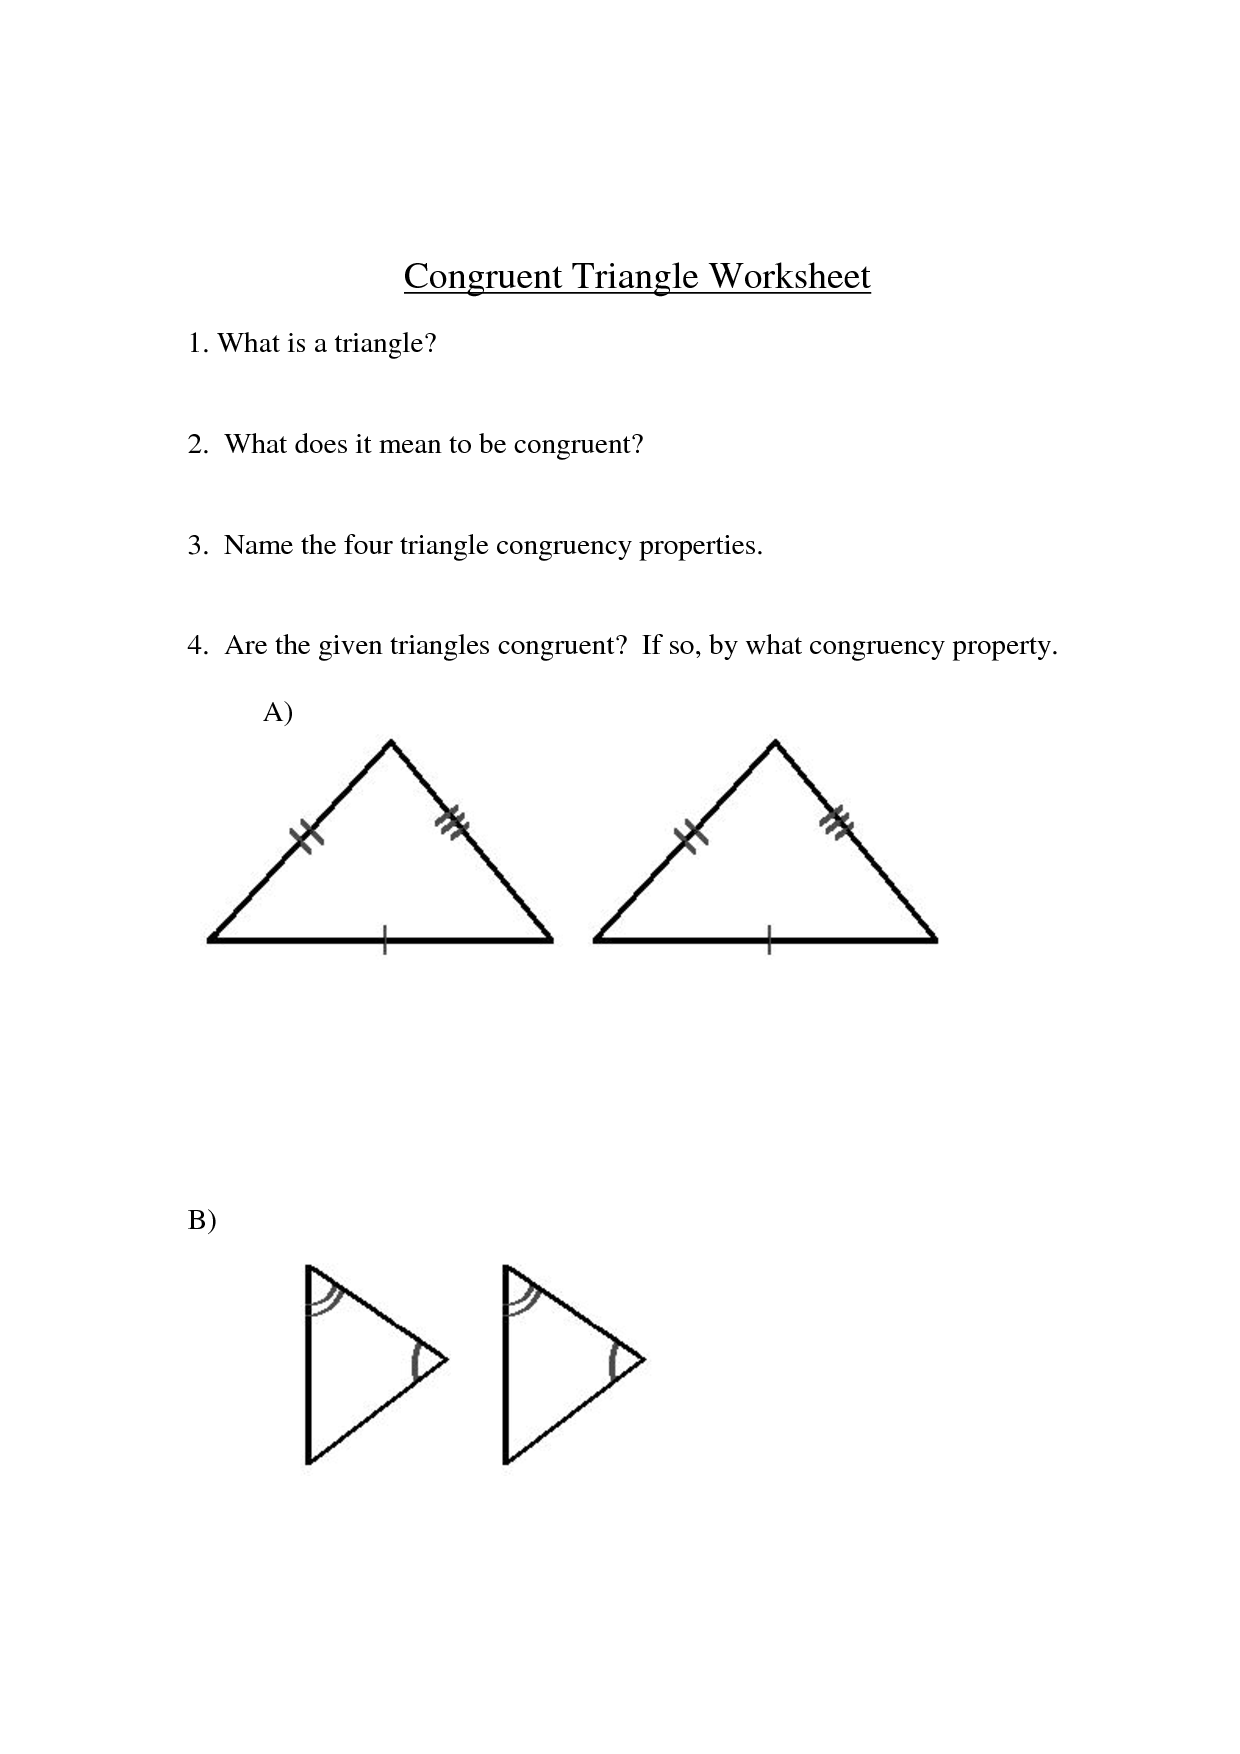 Congruent Triangles Worksheet Image